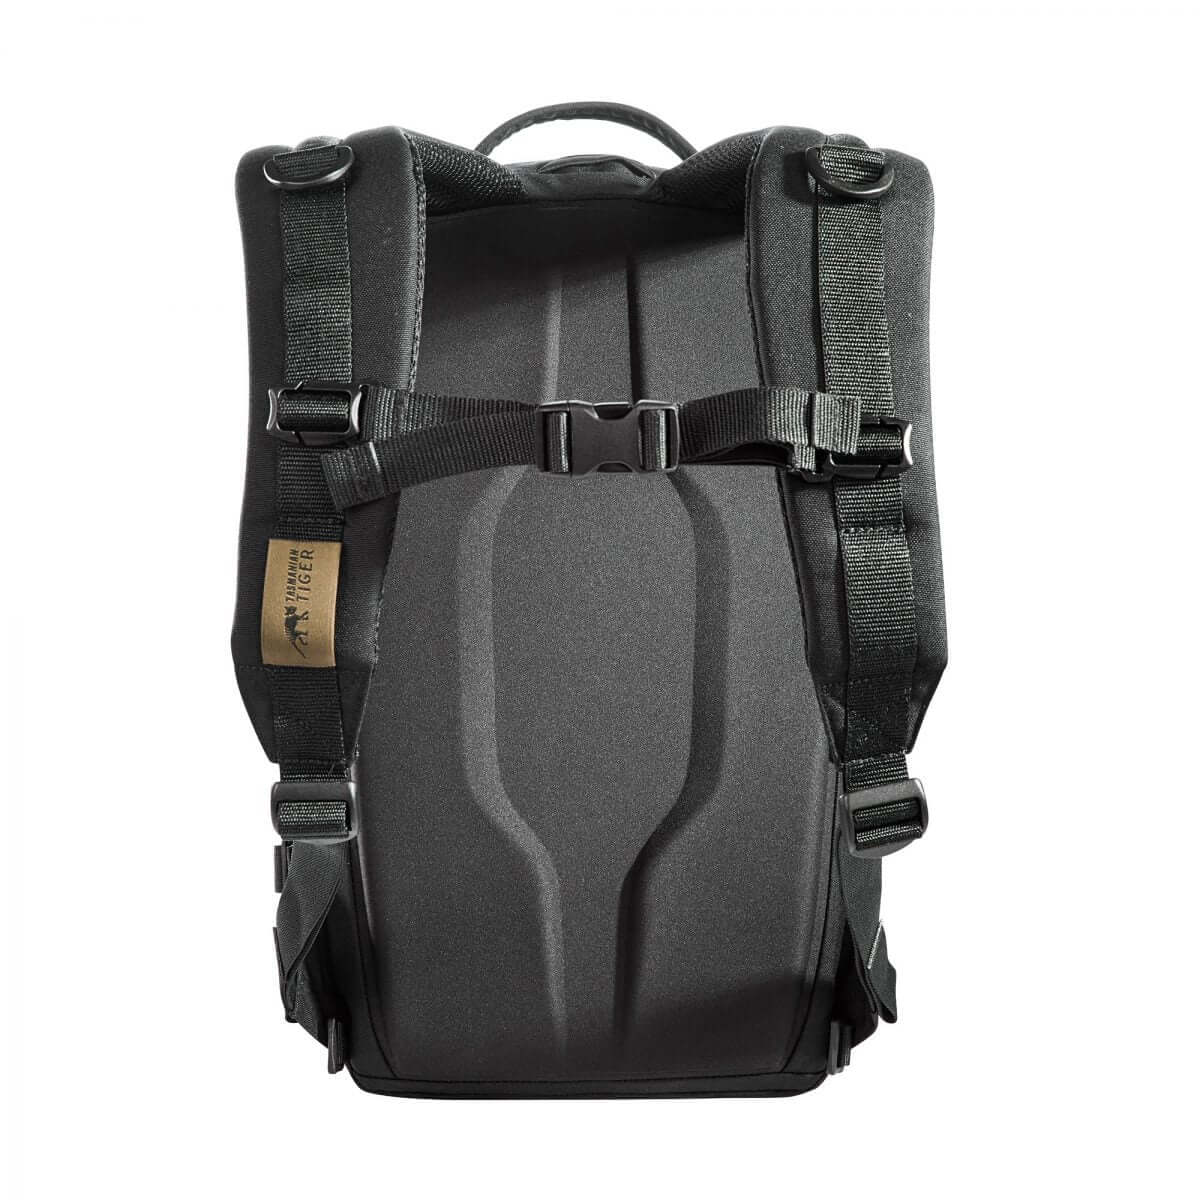 Plecak wojskowy czarny TT Modular Daypack XL